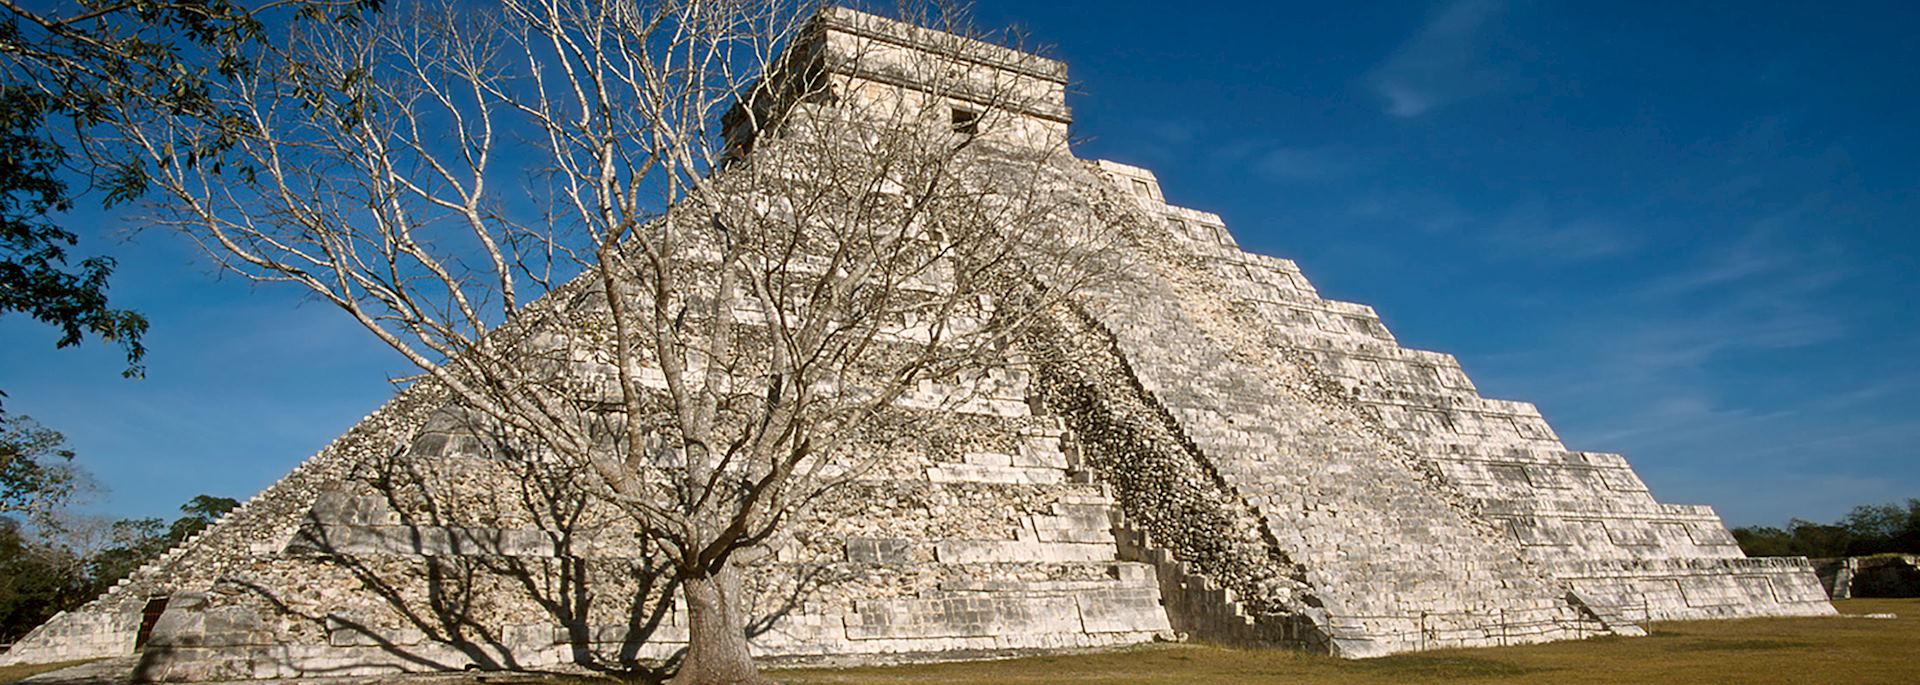 The Maya ruins of Chichén Itzá, Mexico